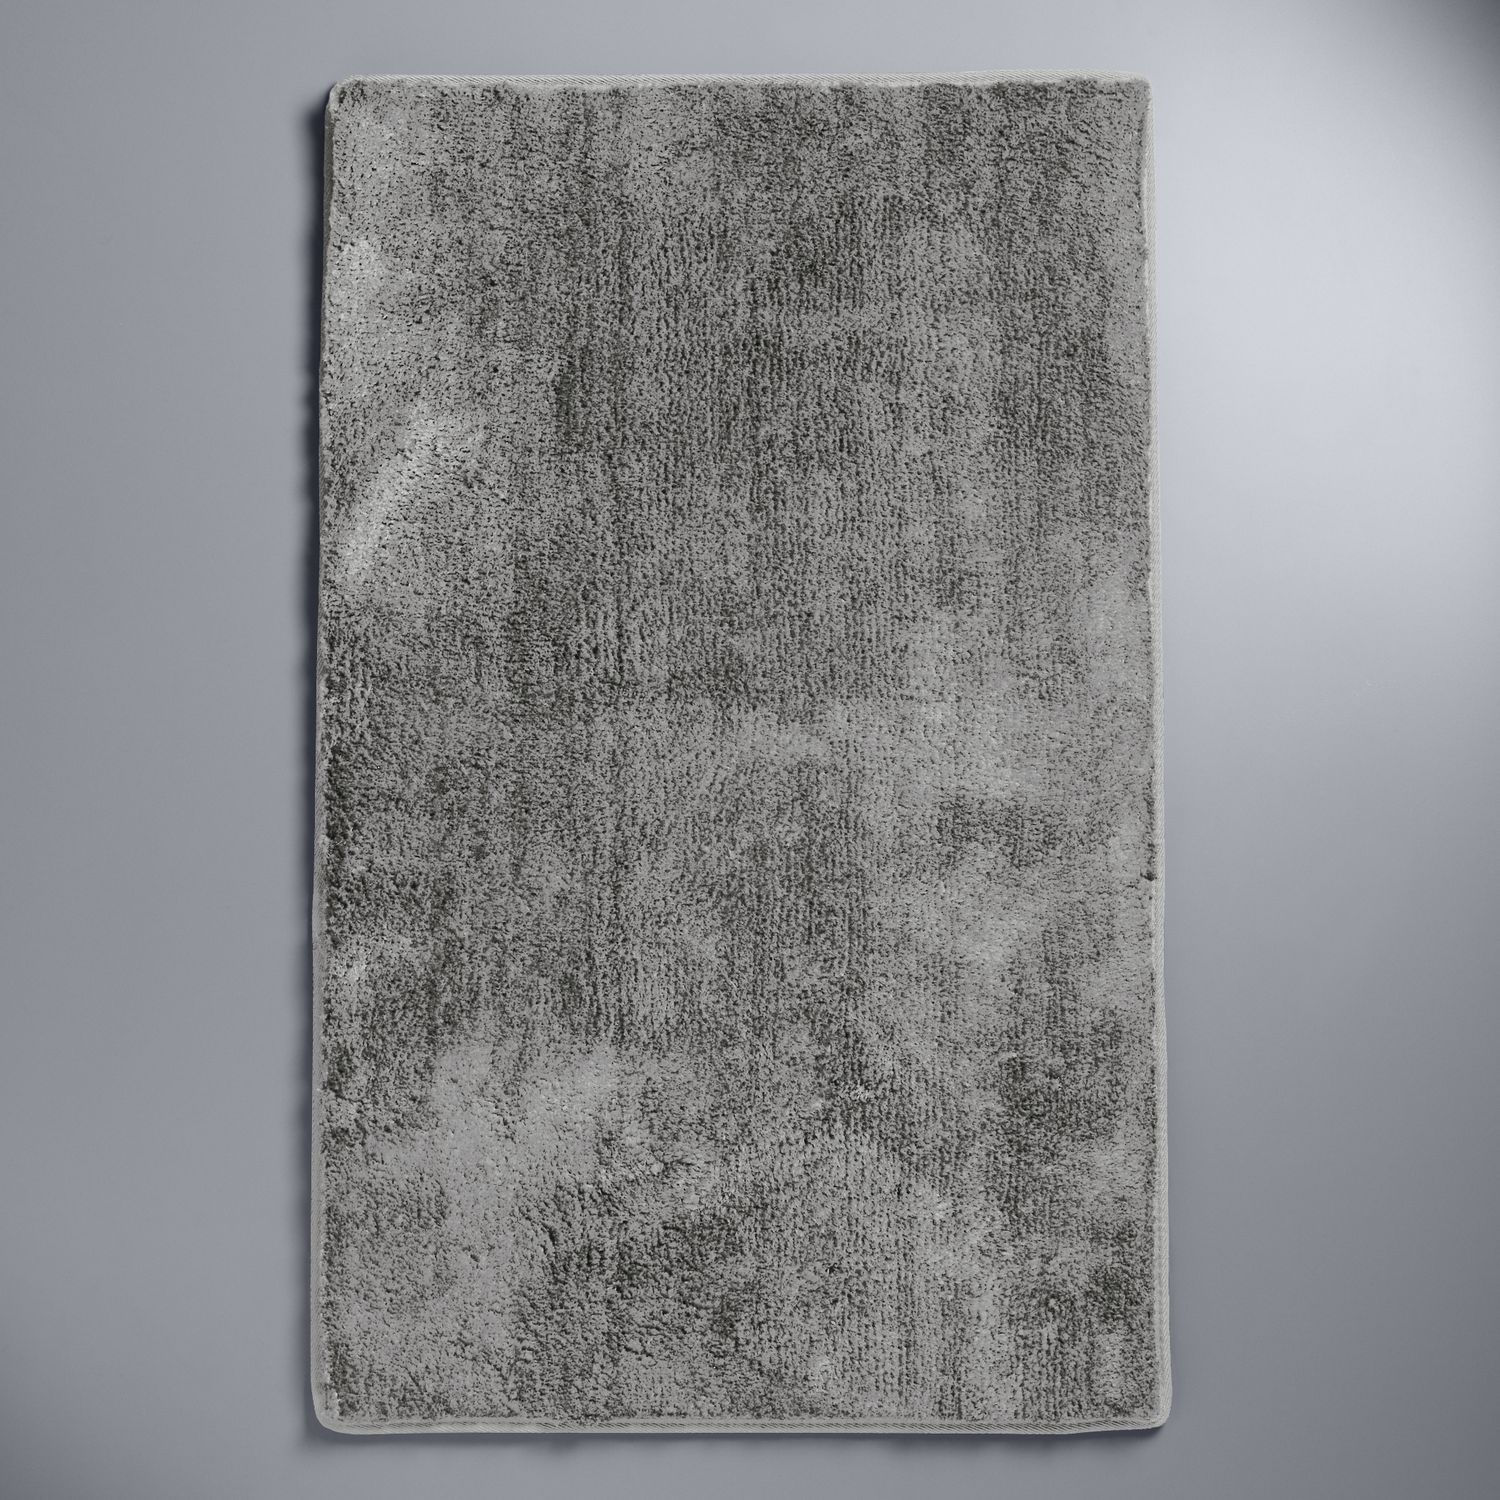 gray and white bath rug